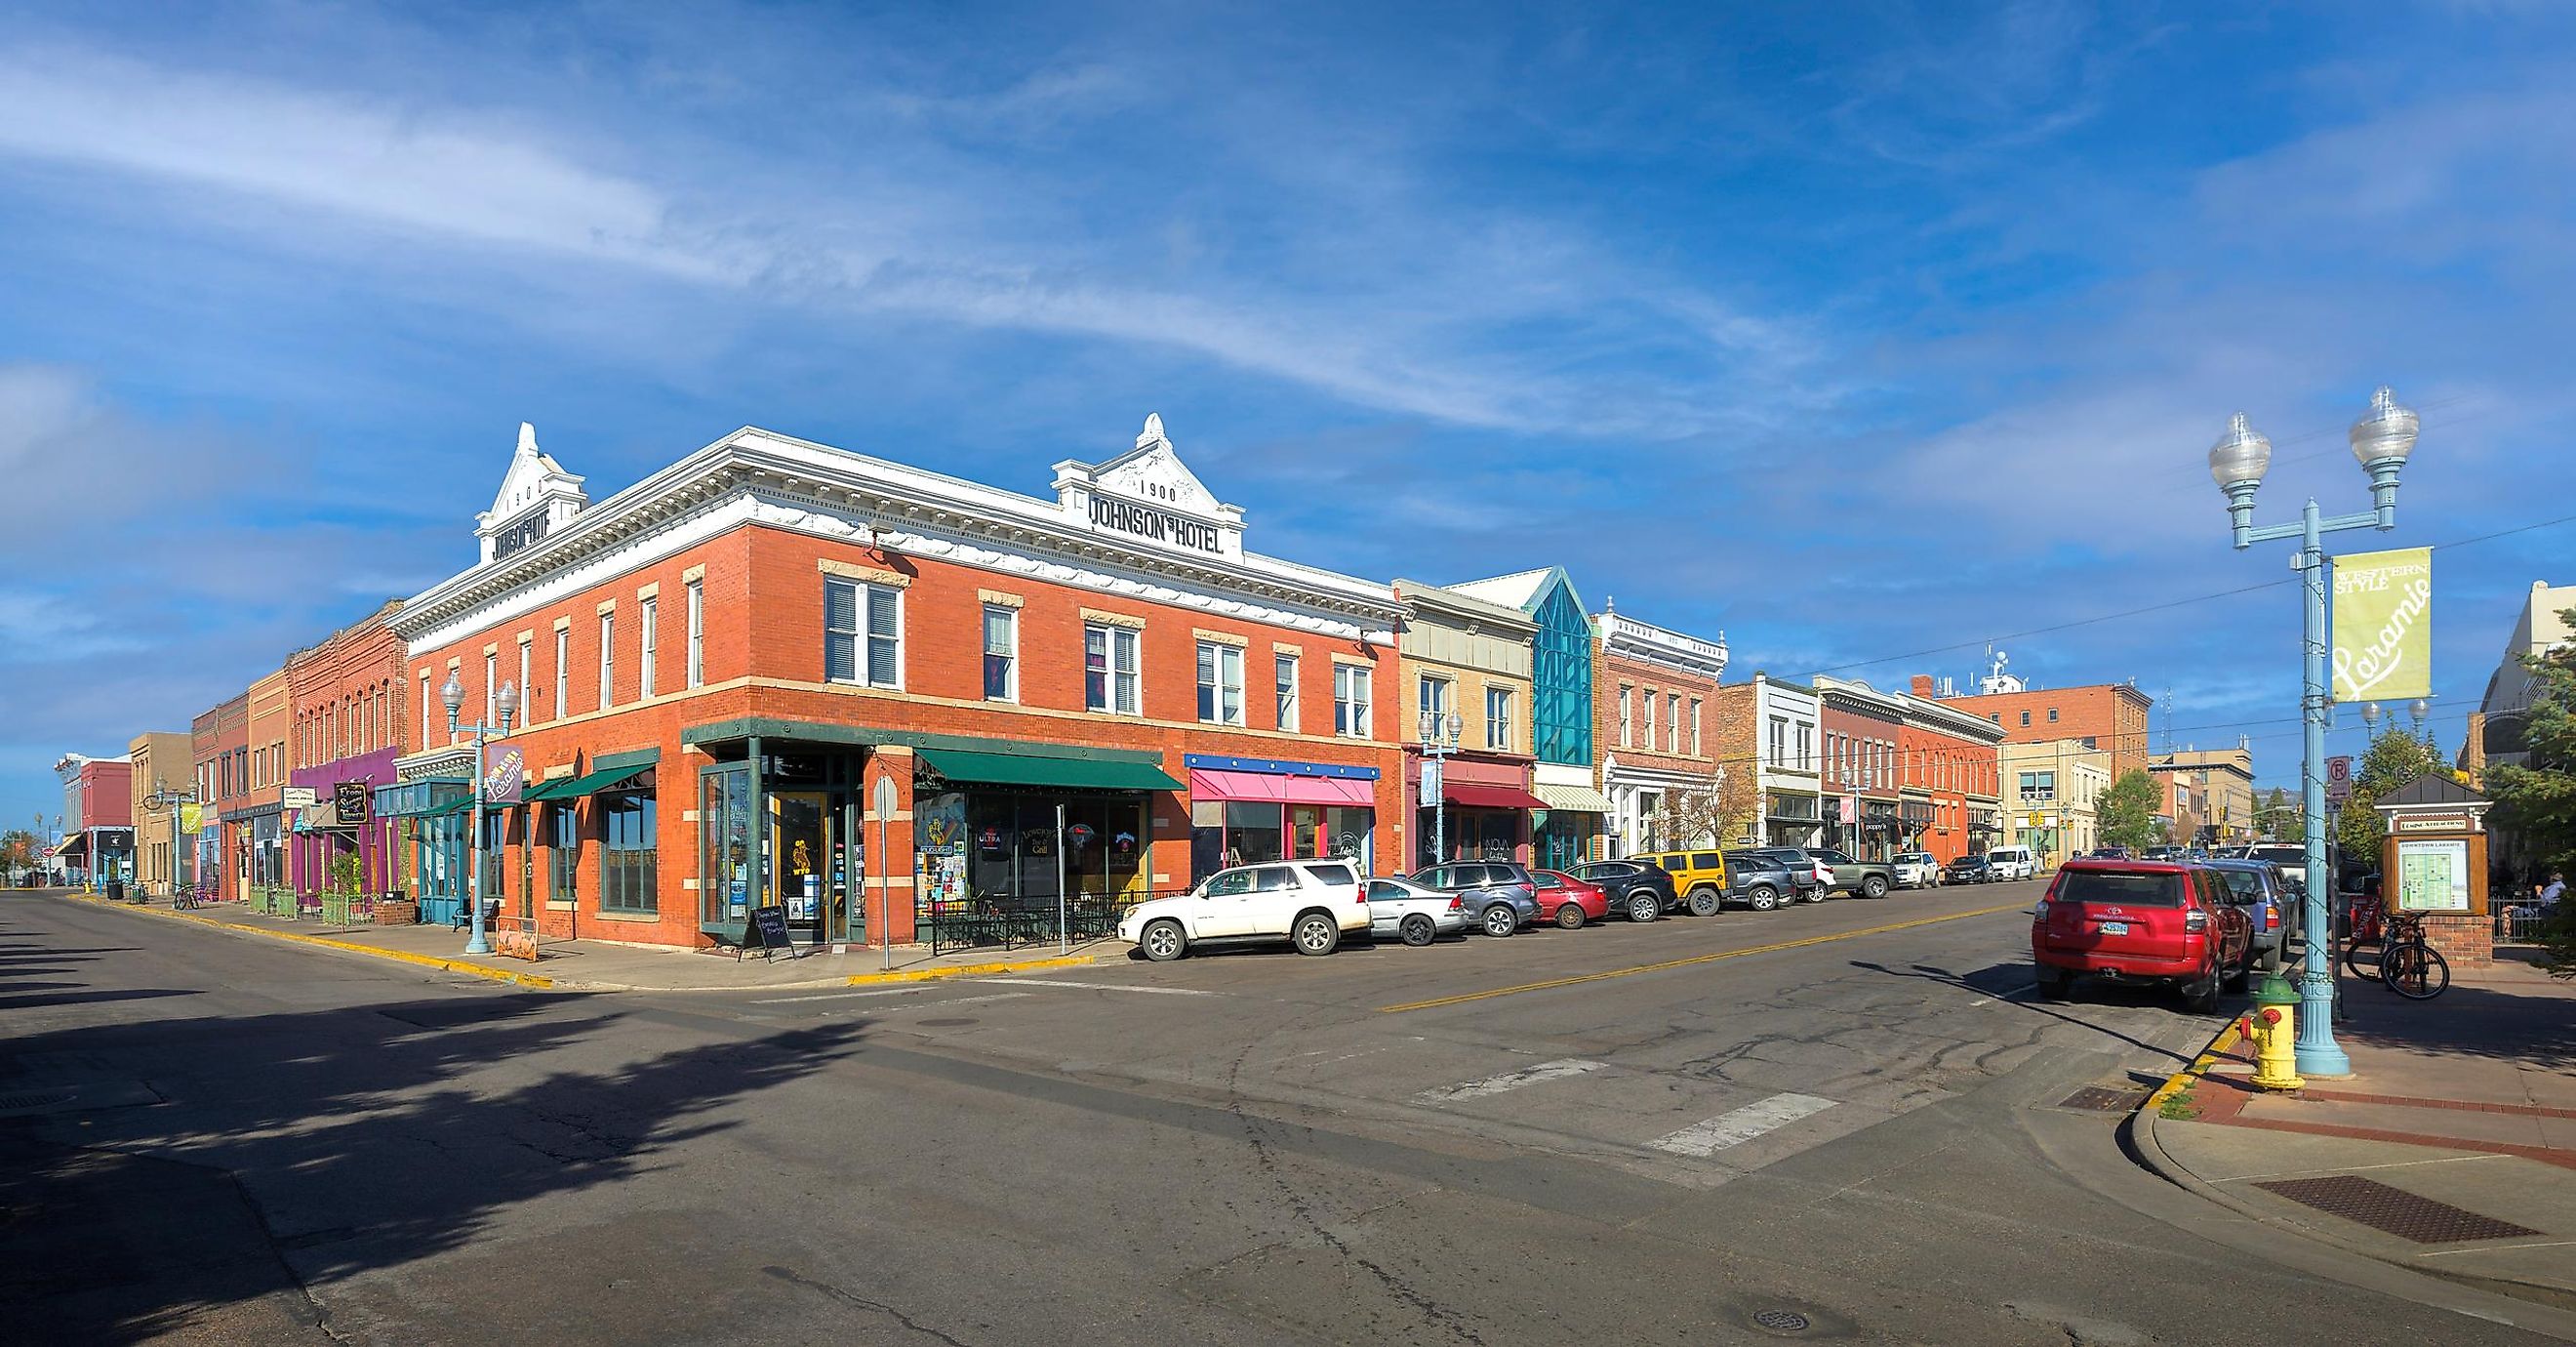 Downtown Laramie, Wyoming. Editorial credit: Nagel Photography / Shutterstock.com